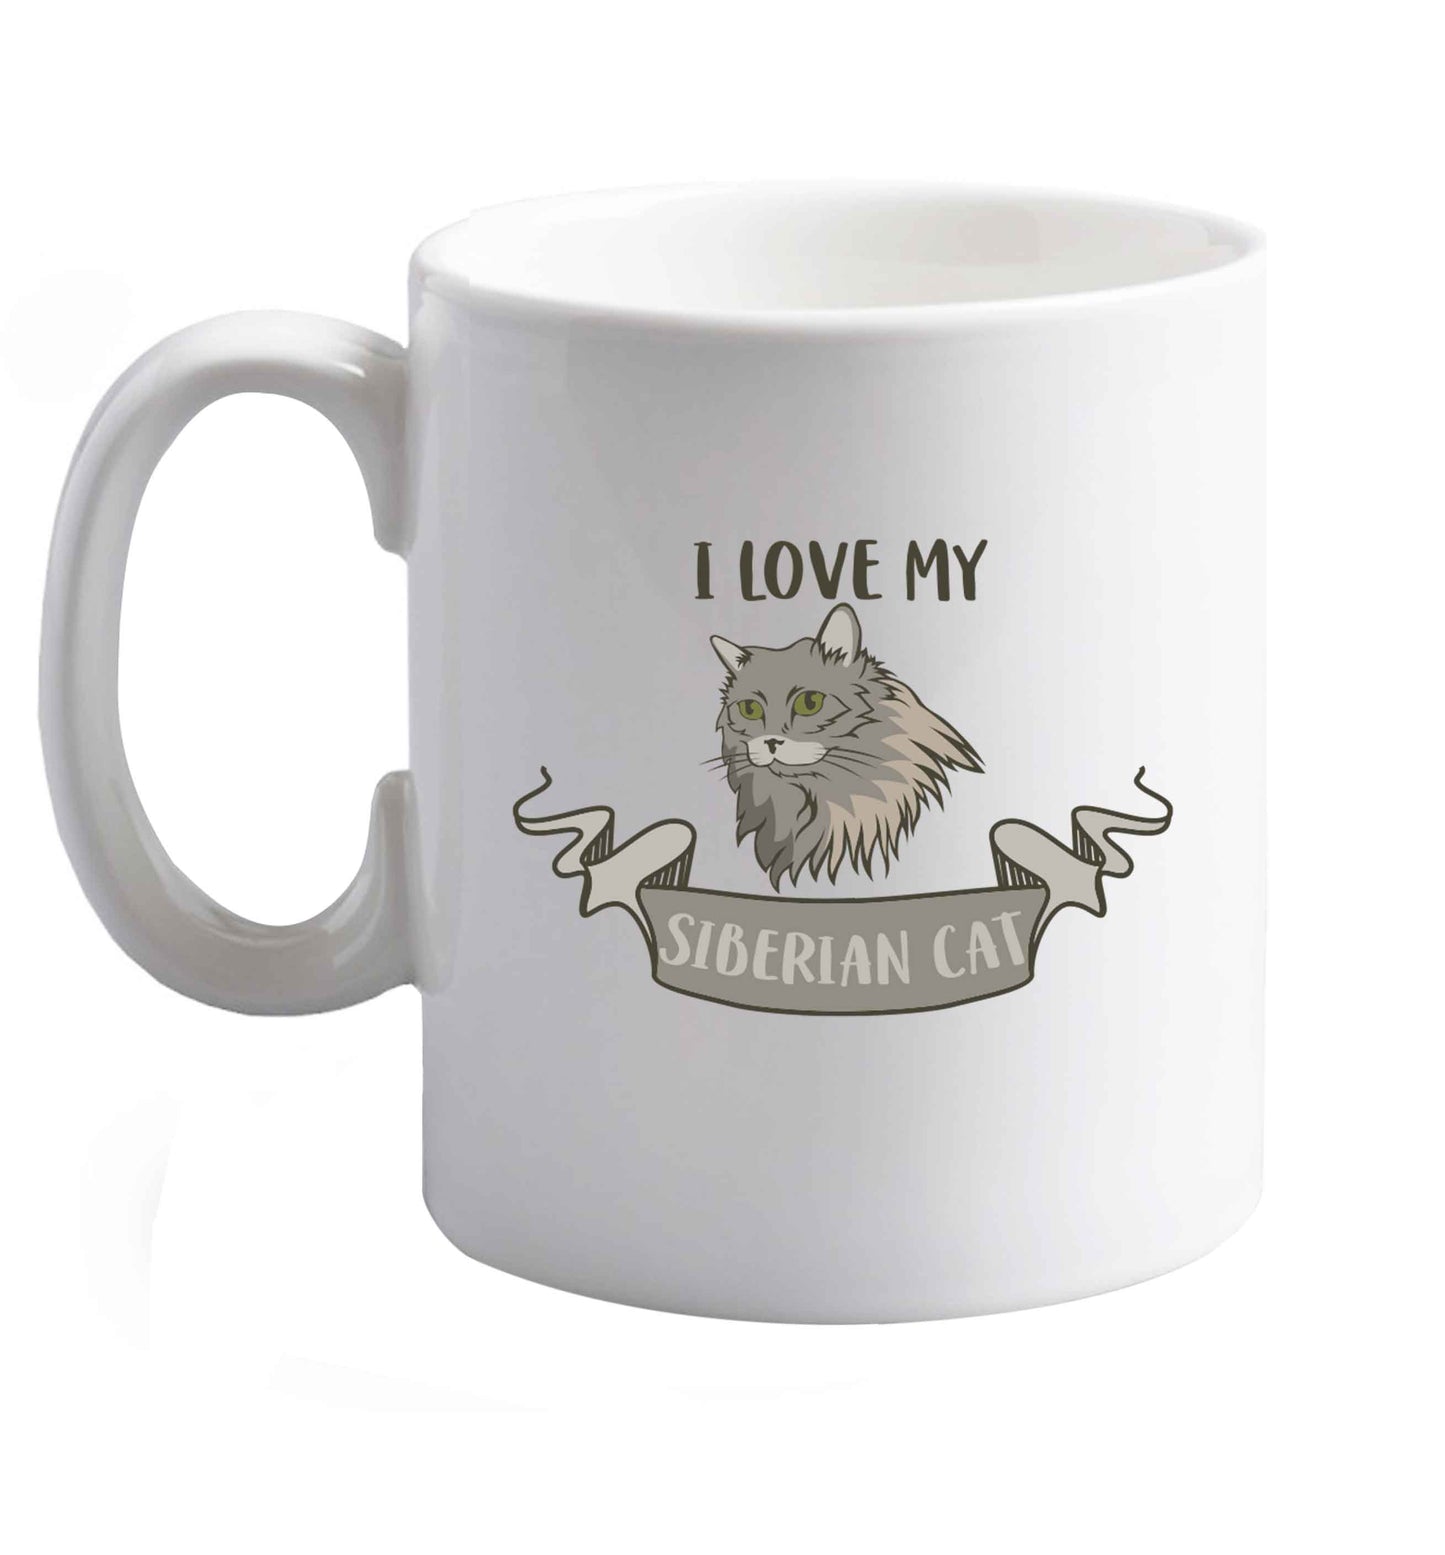 10 oz I love my siberian cat ceramic mug right handed